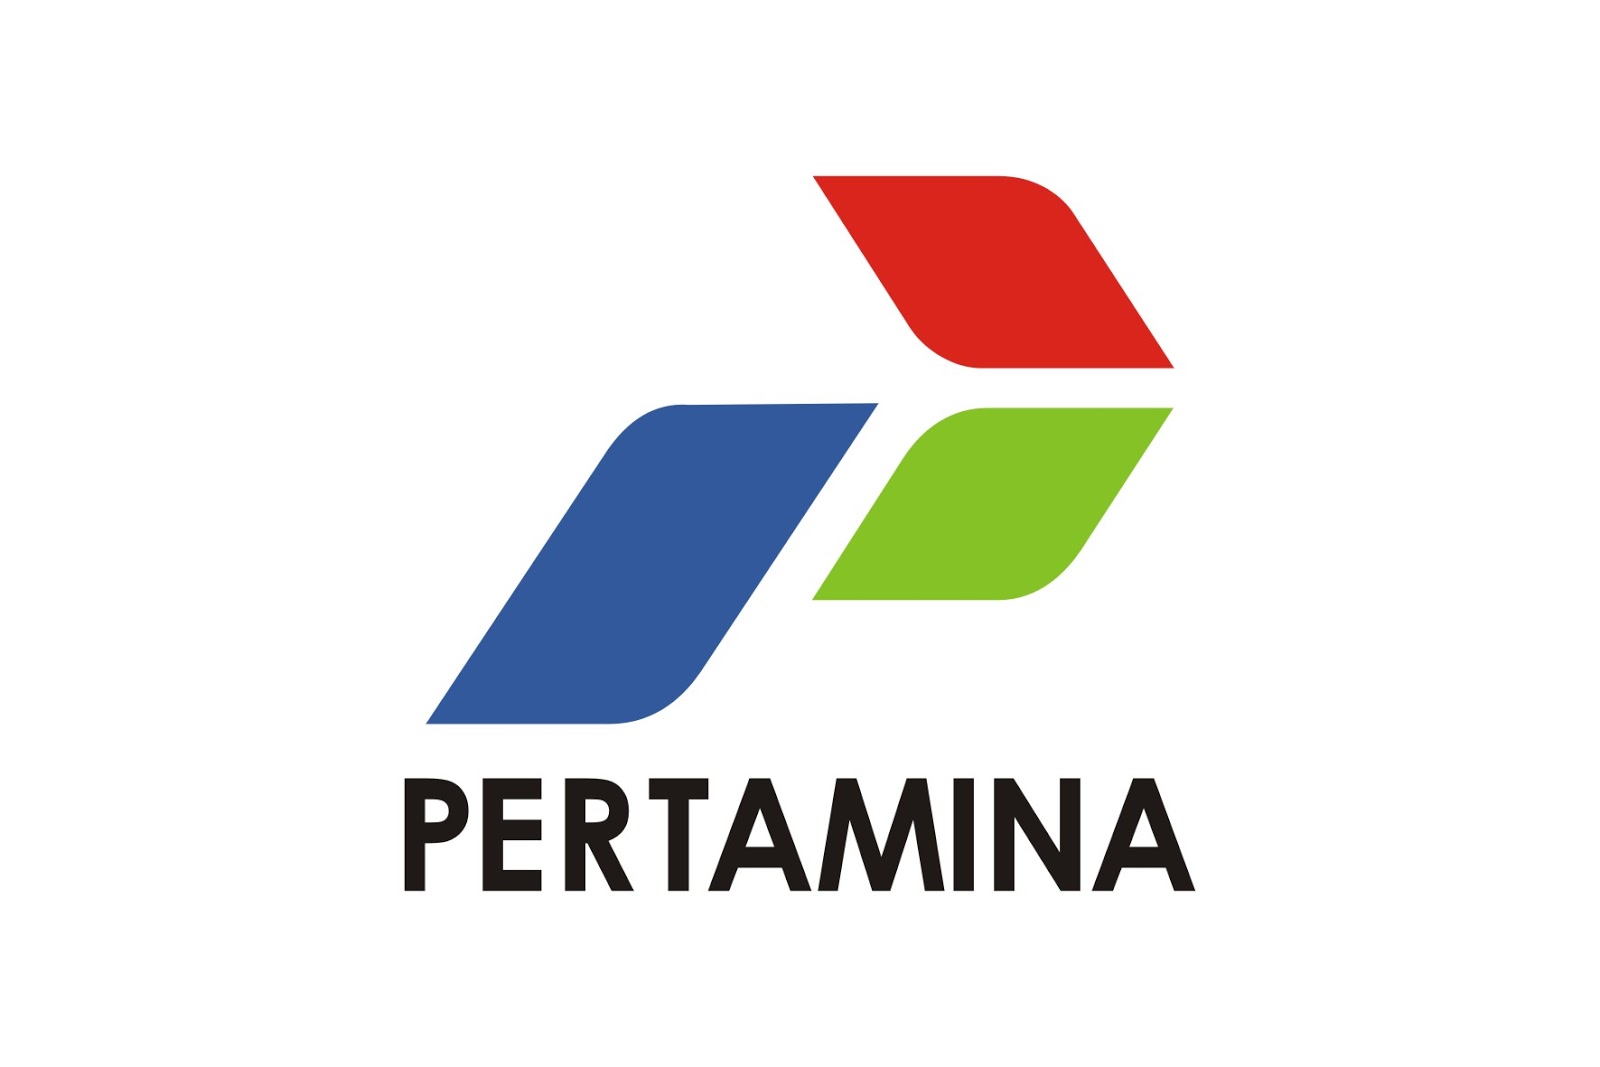  Pertamina  Logo Logo Share